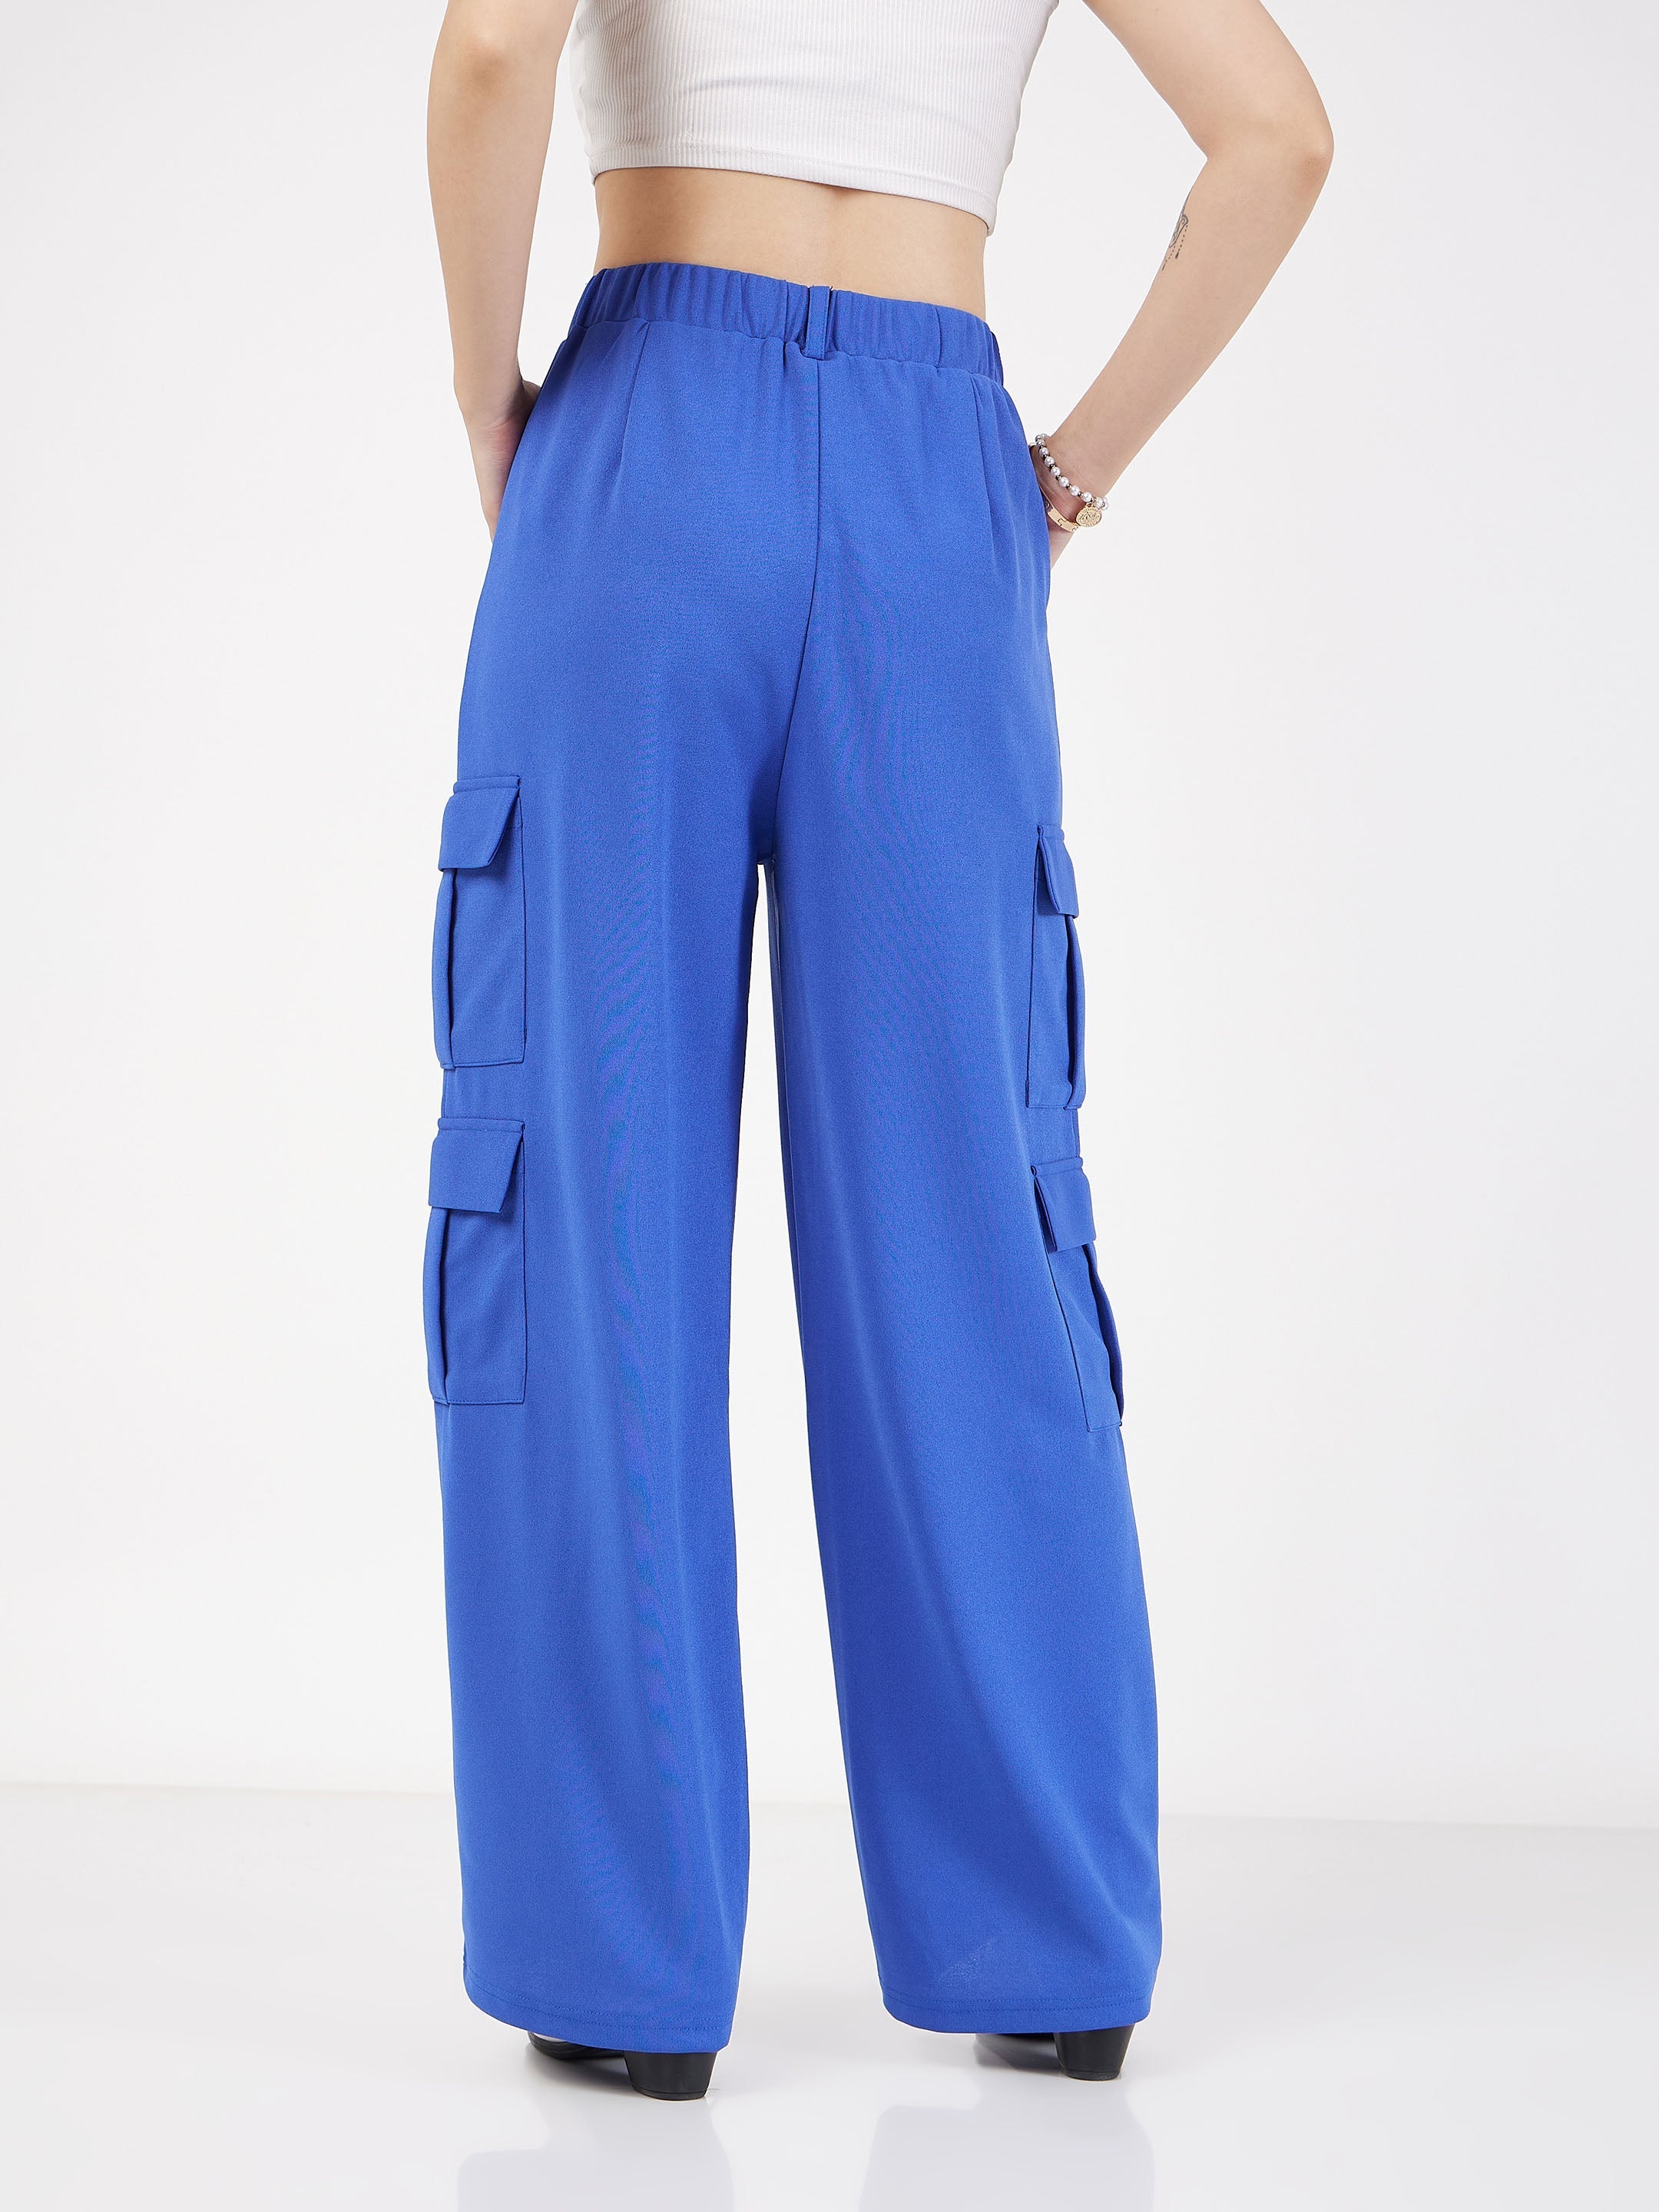 Women's Royal Blue Multi Pocket Detail Cargo Pants - Lyush